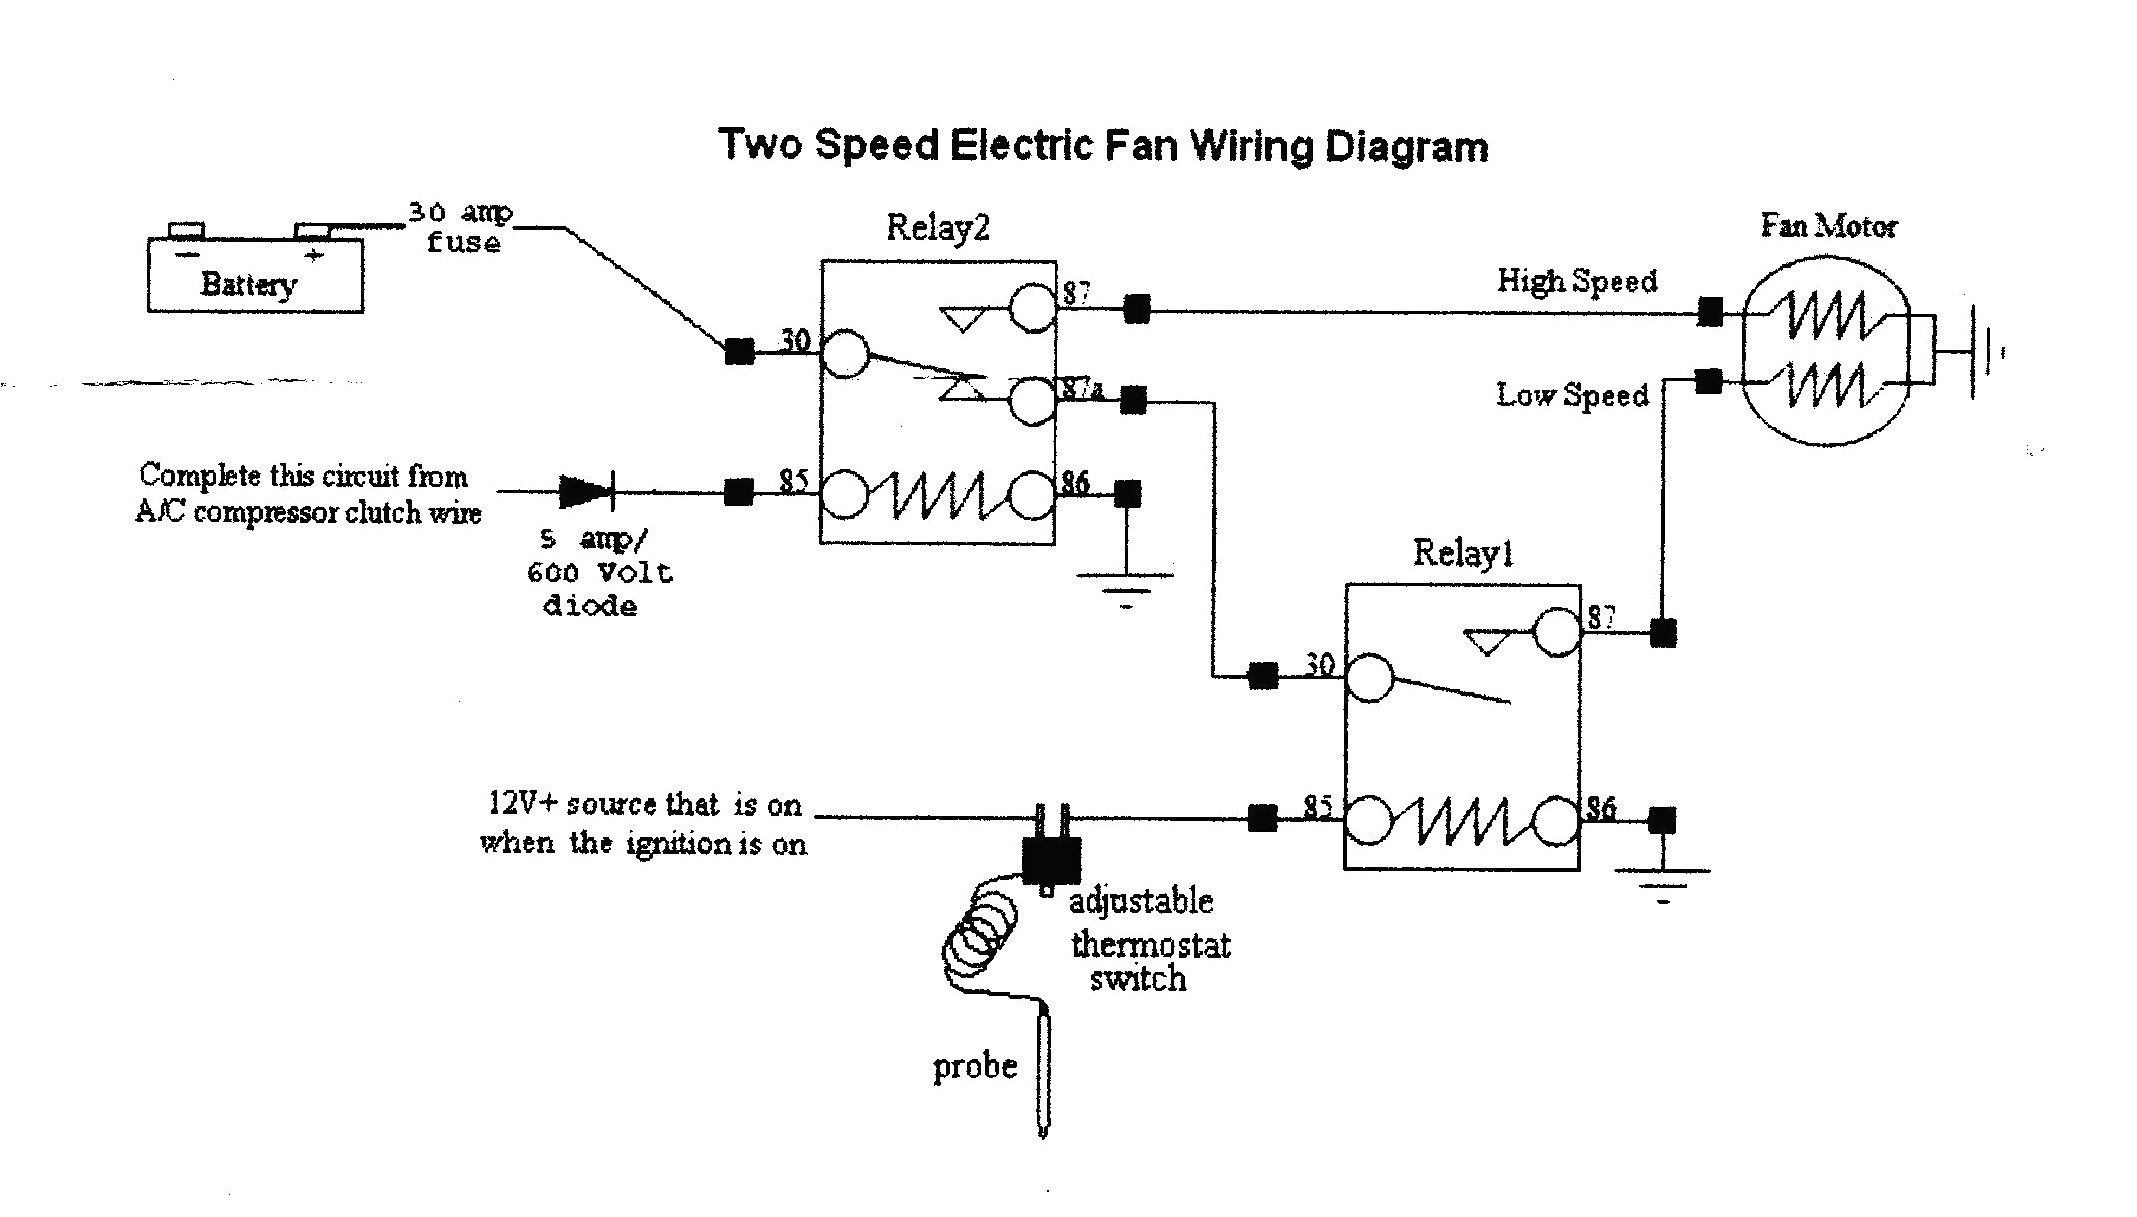 Wiring Diagram for Two Speed attic Fan Switch Unique Wiring Diagram for Electric Fan Relay Diagram Of Wiring Diagram for Two Speed attic Fan Switch